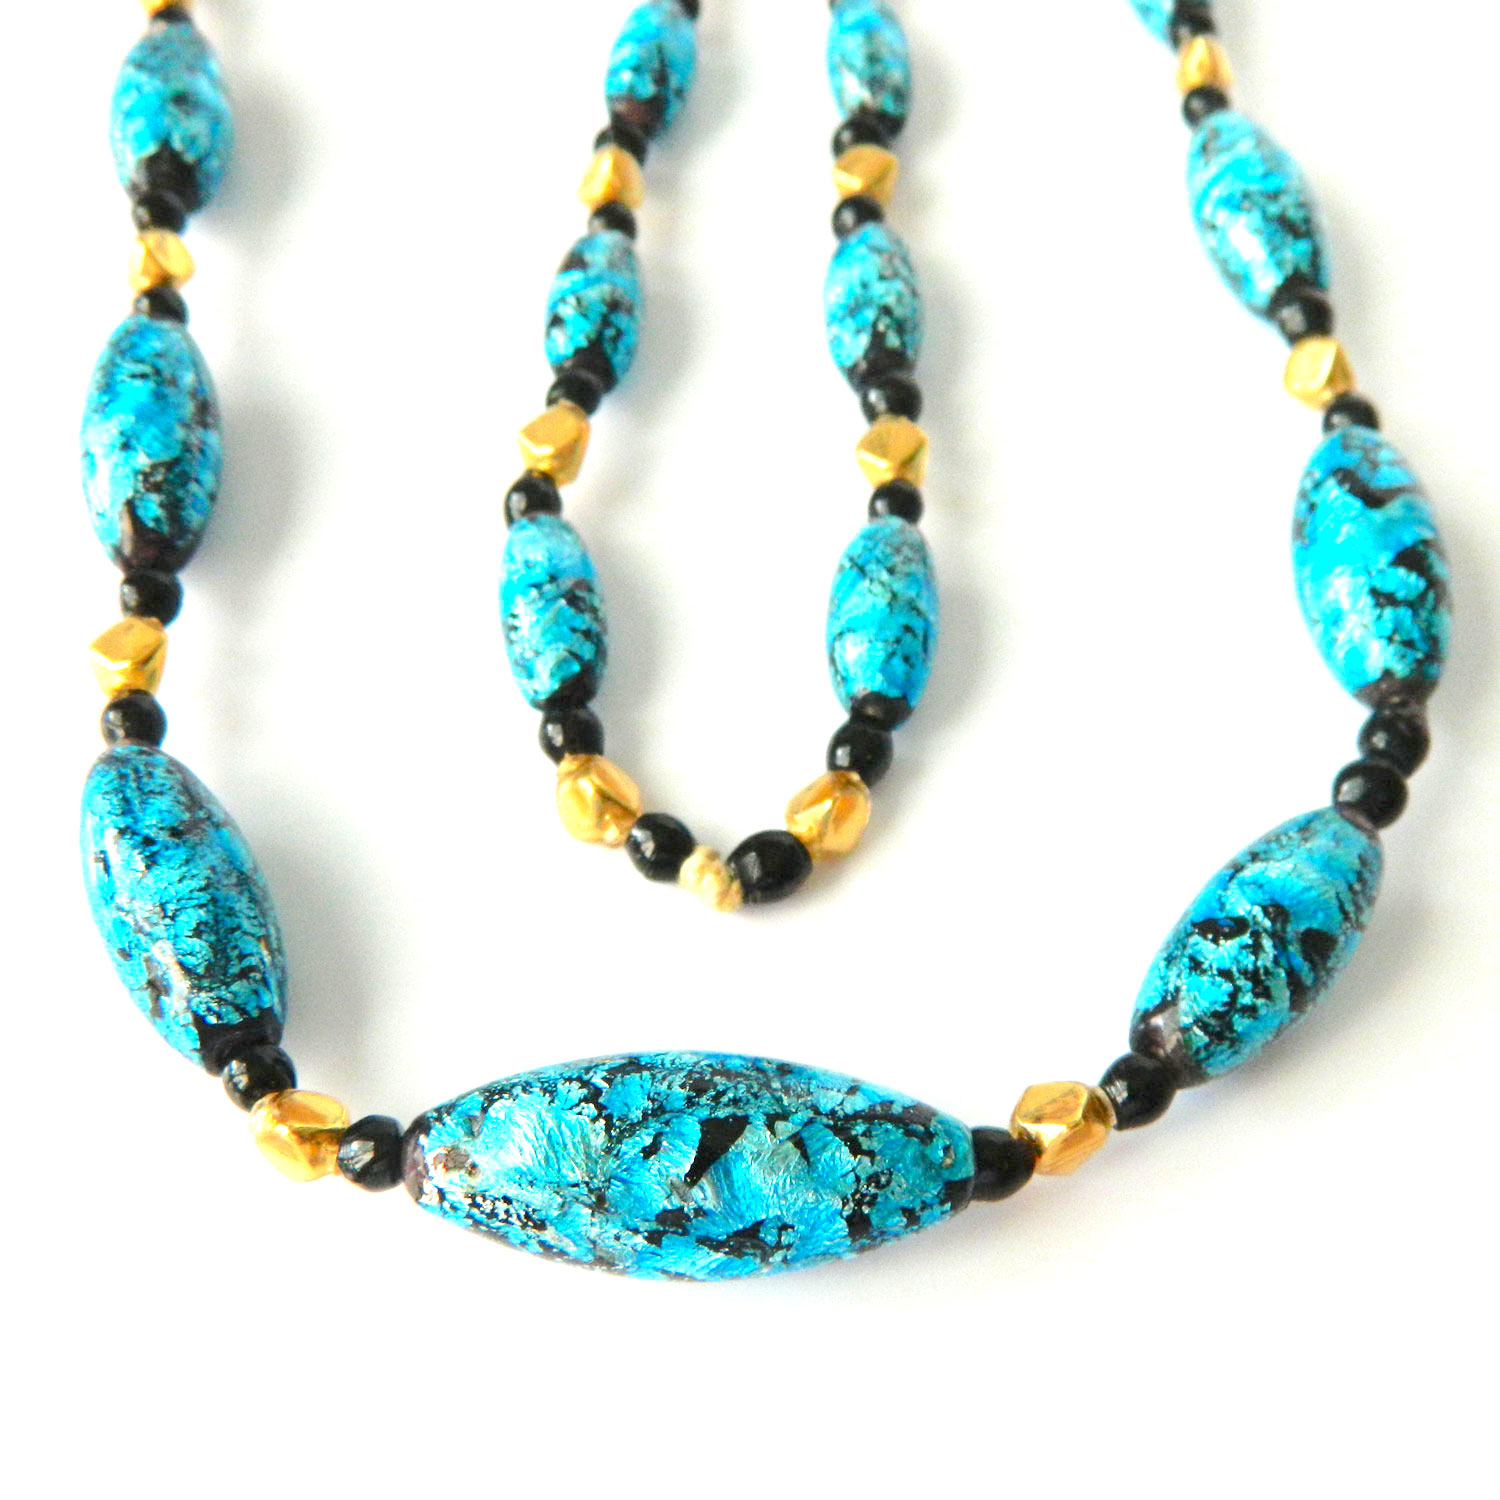 Antique Murano glass necklace